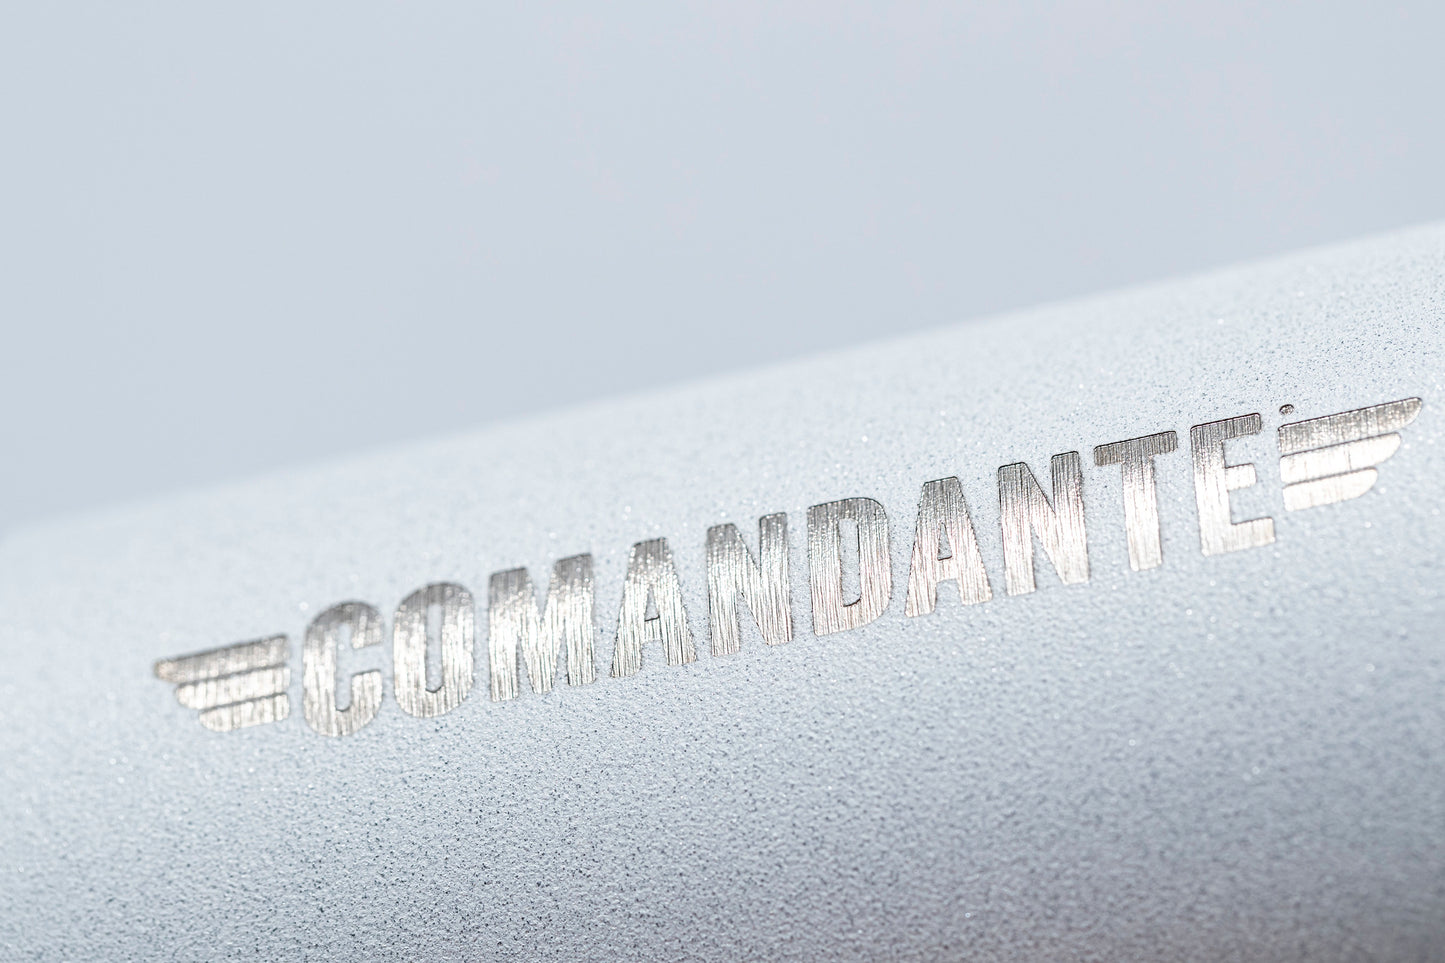 COMANDANTE - MK4 Nitro Blade C40 grinder - Snow White